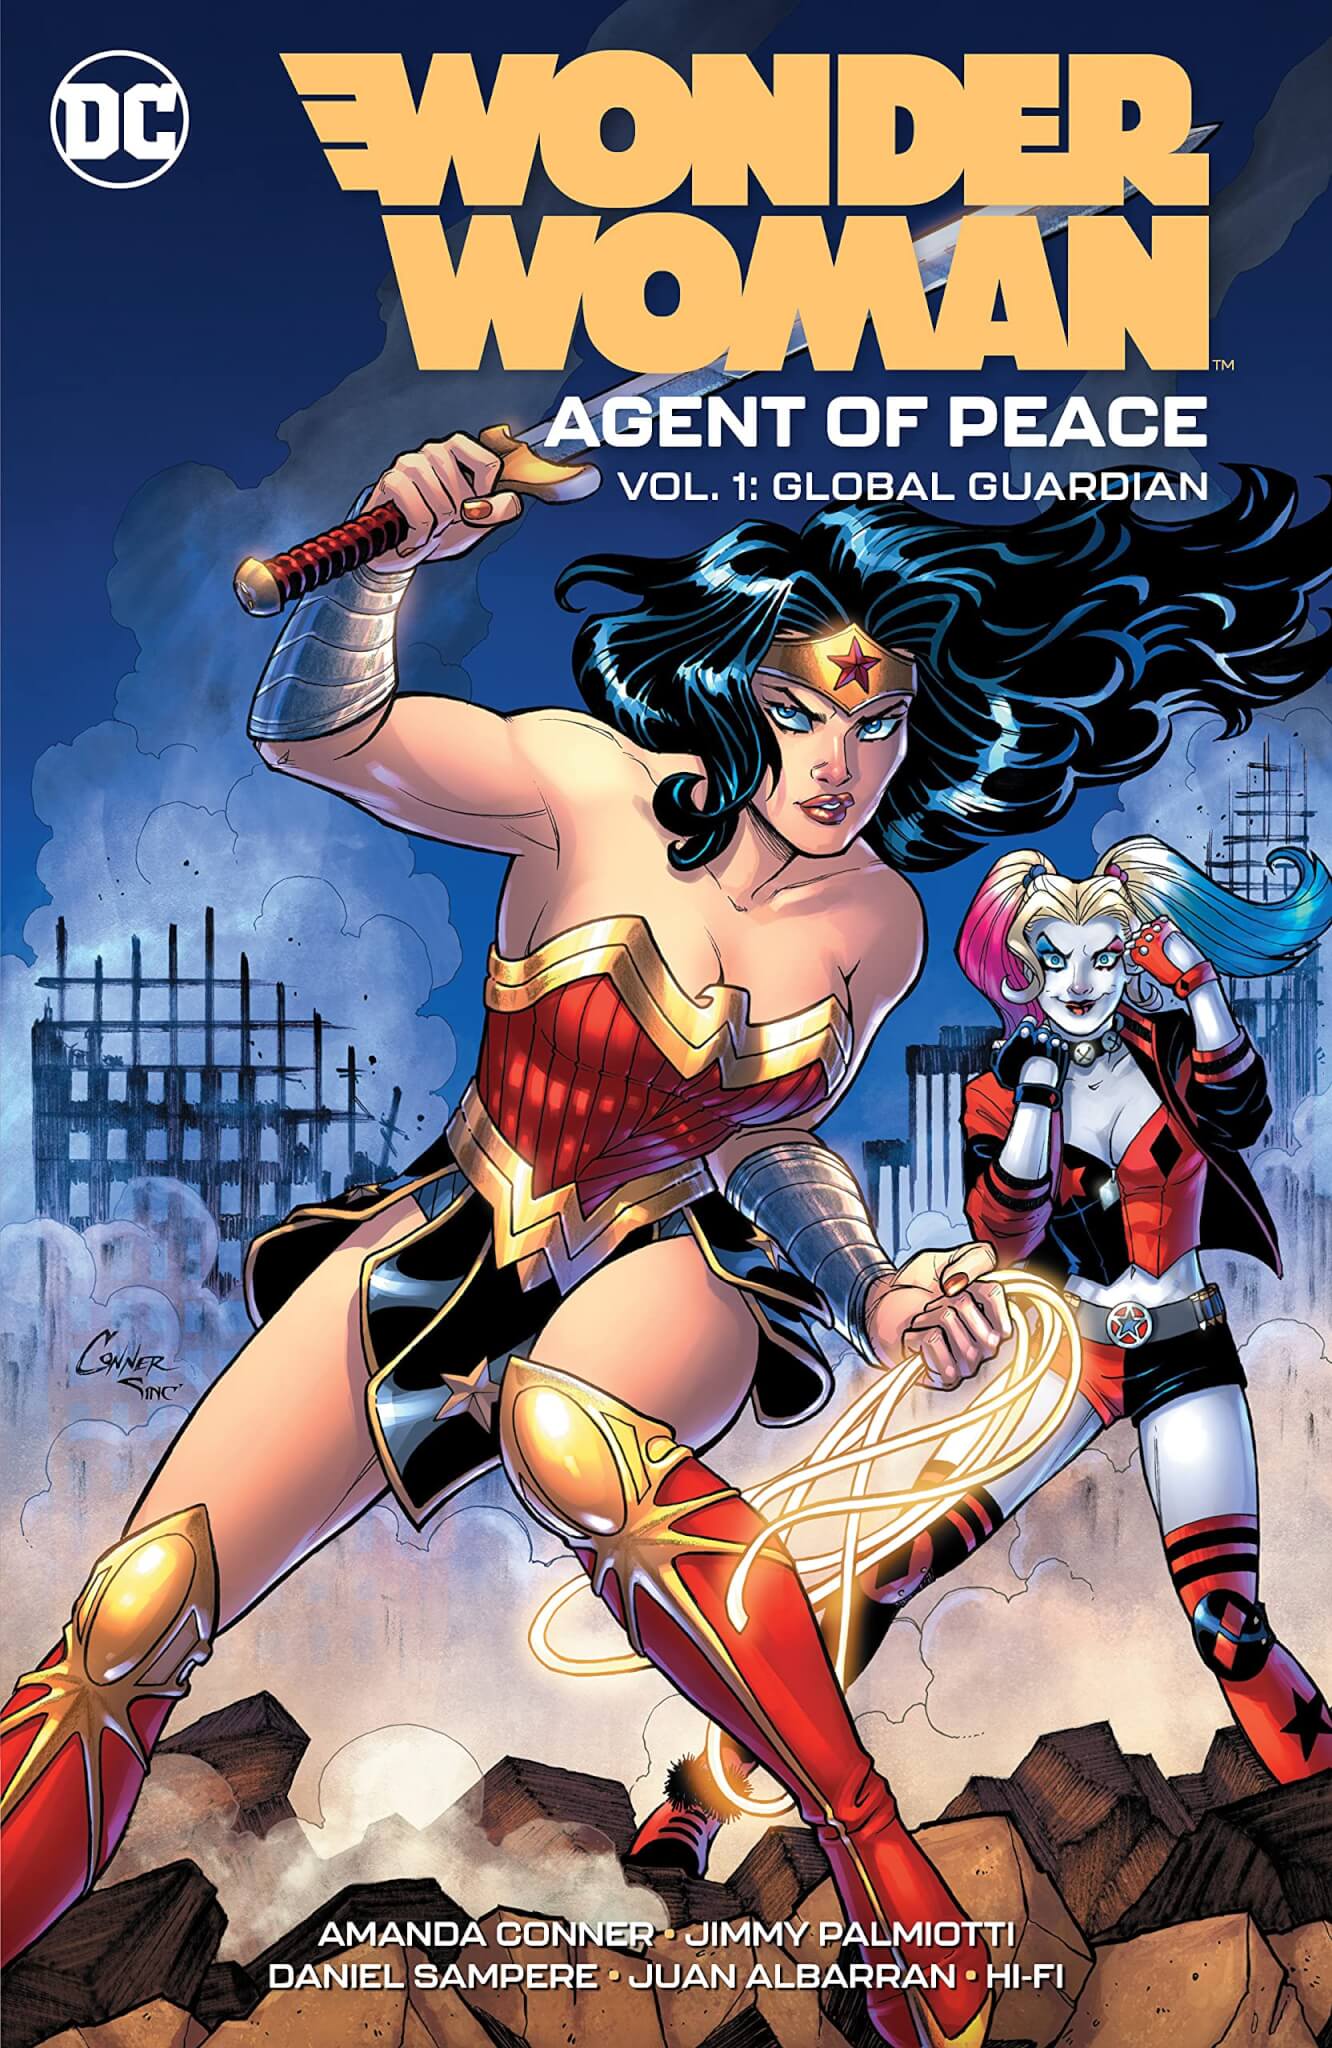 "Wonder Woman Agent of Peace 1: Global Guardian" 